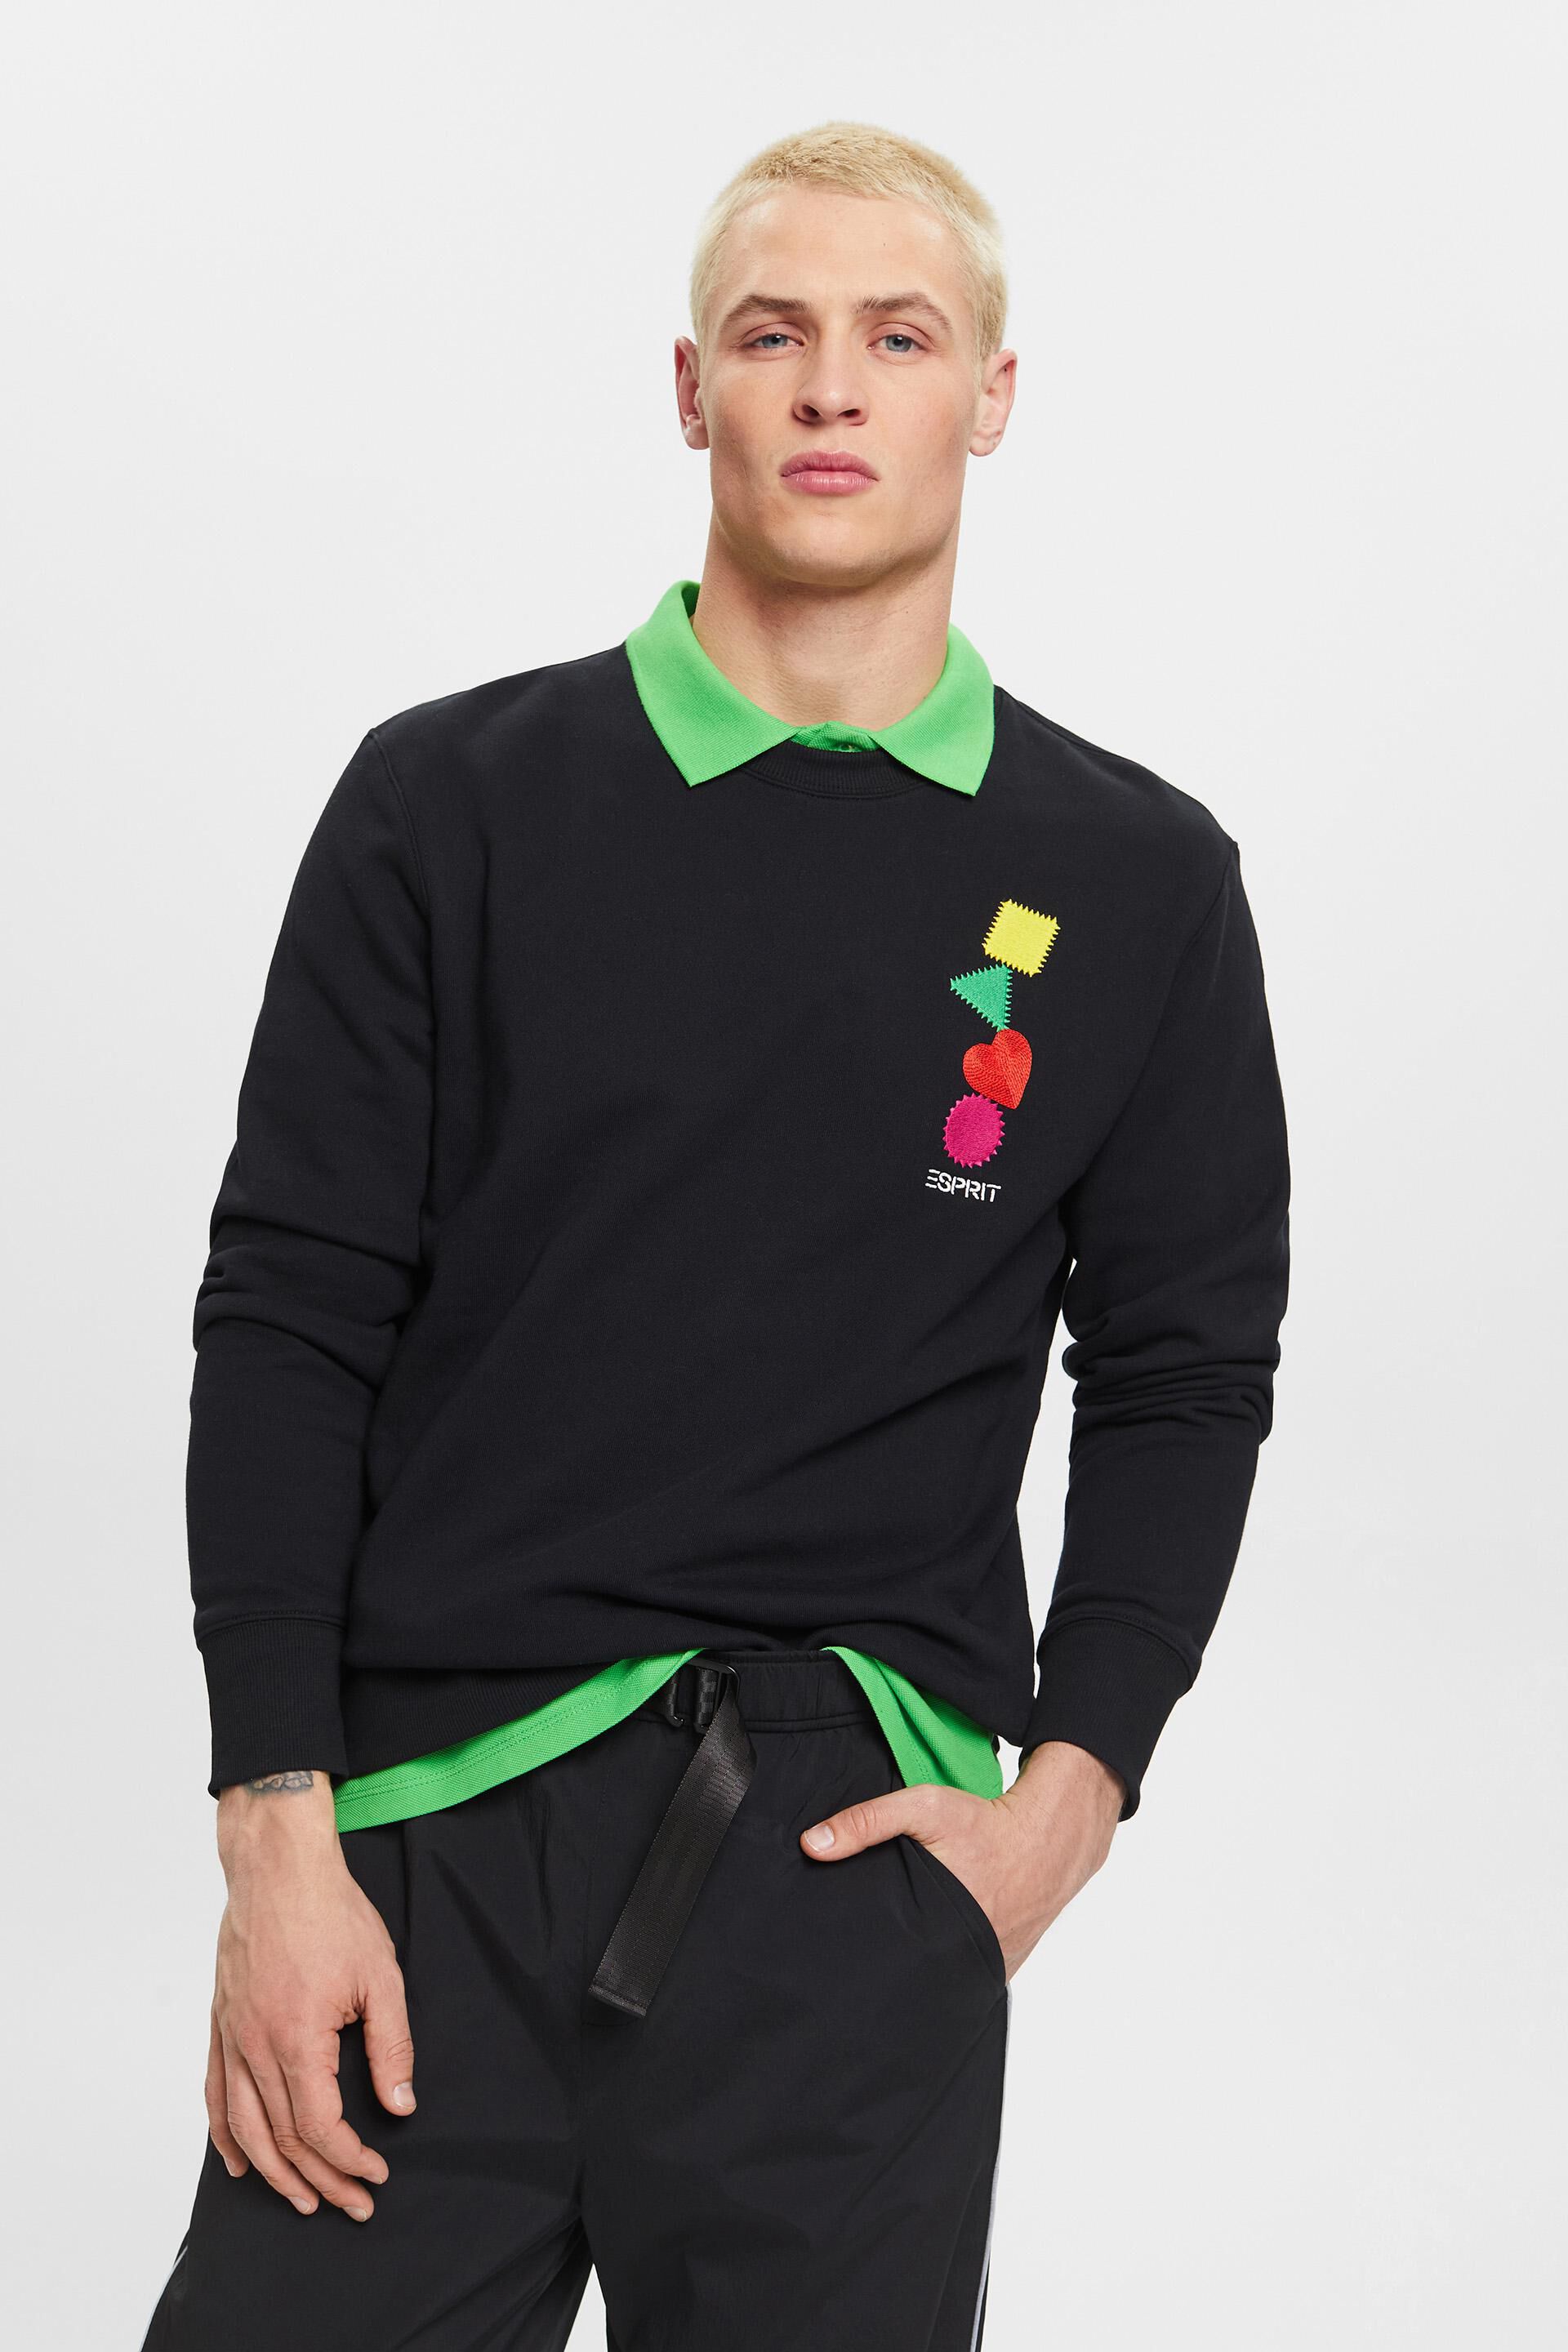 Esprit with heart Sweatshirt embroidered geometric motif